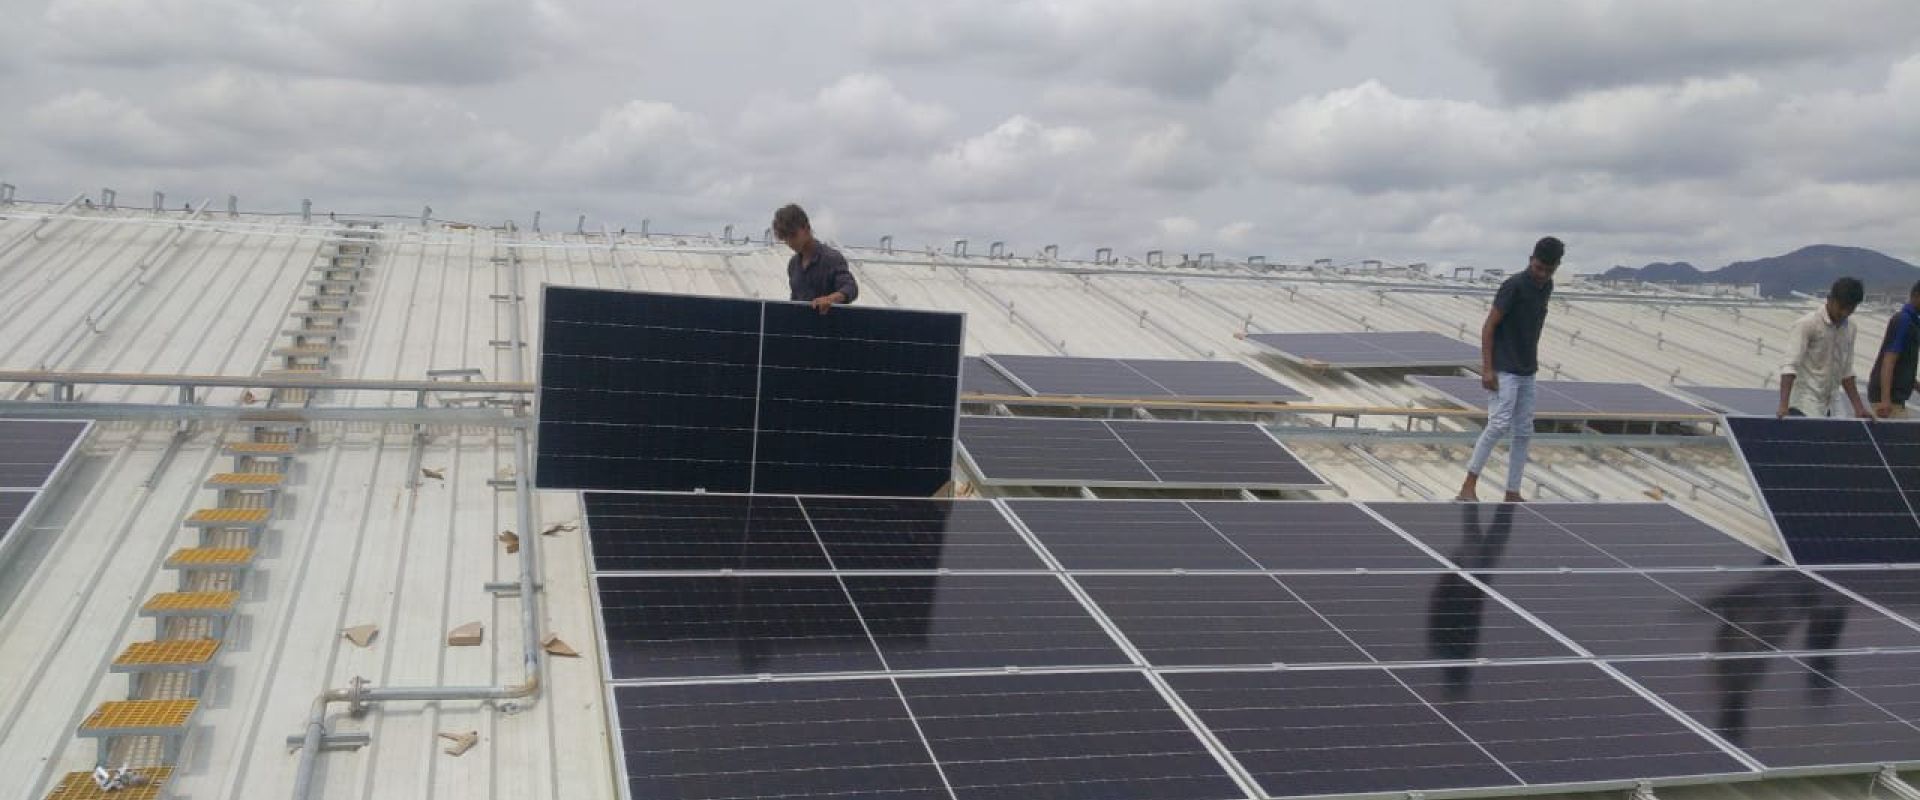 business solar panels uk